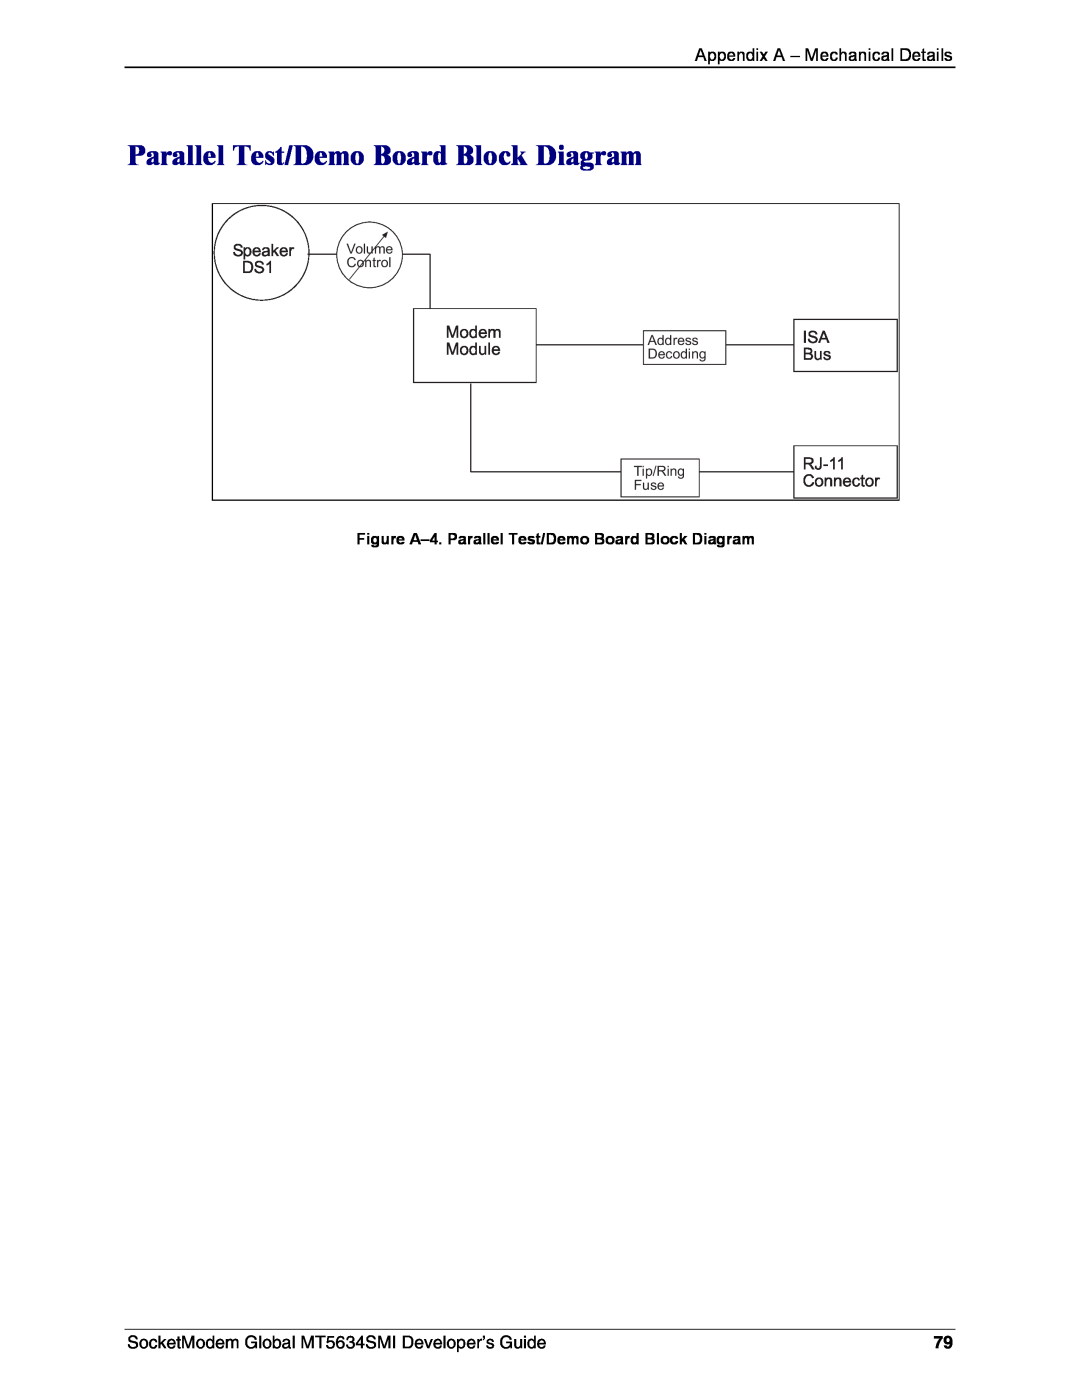 Technics MT5634SMI-34, MT5634SMI-92 manual Figure A-4. Parallel Test/Demo Board Block Diagram 